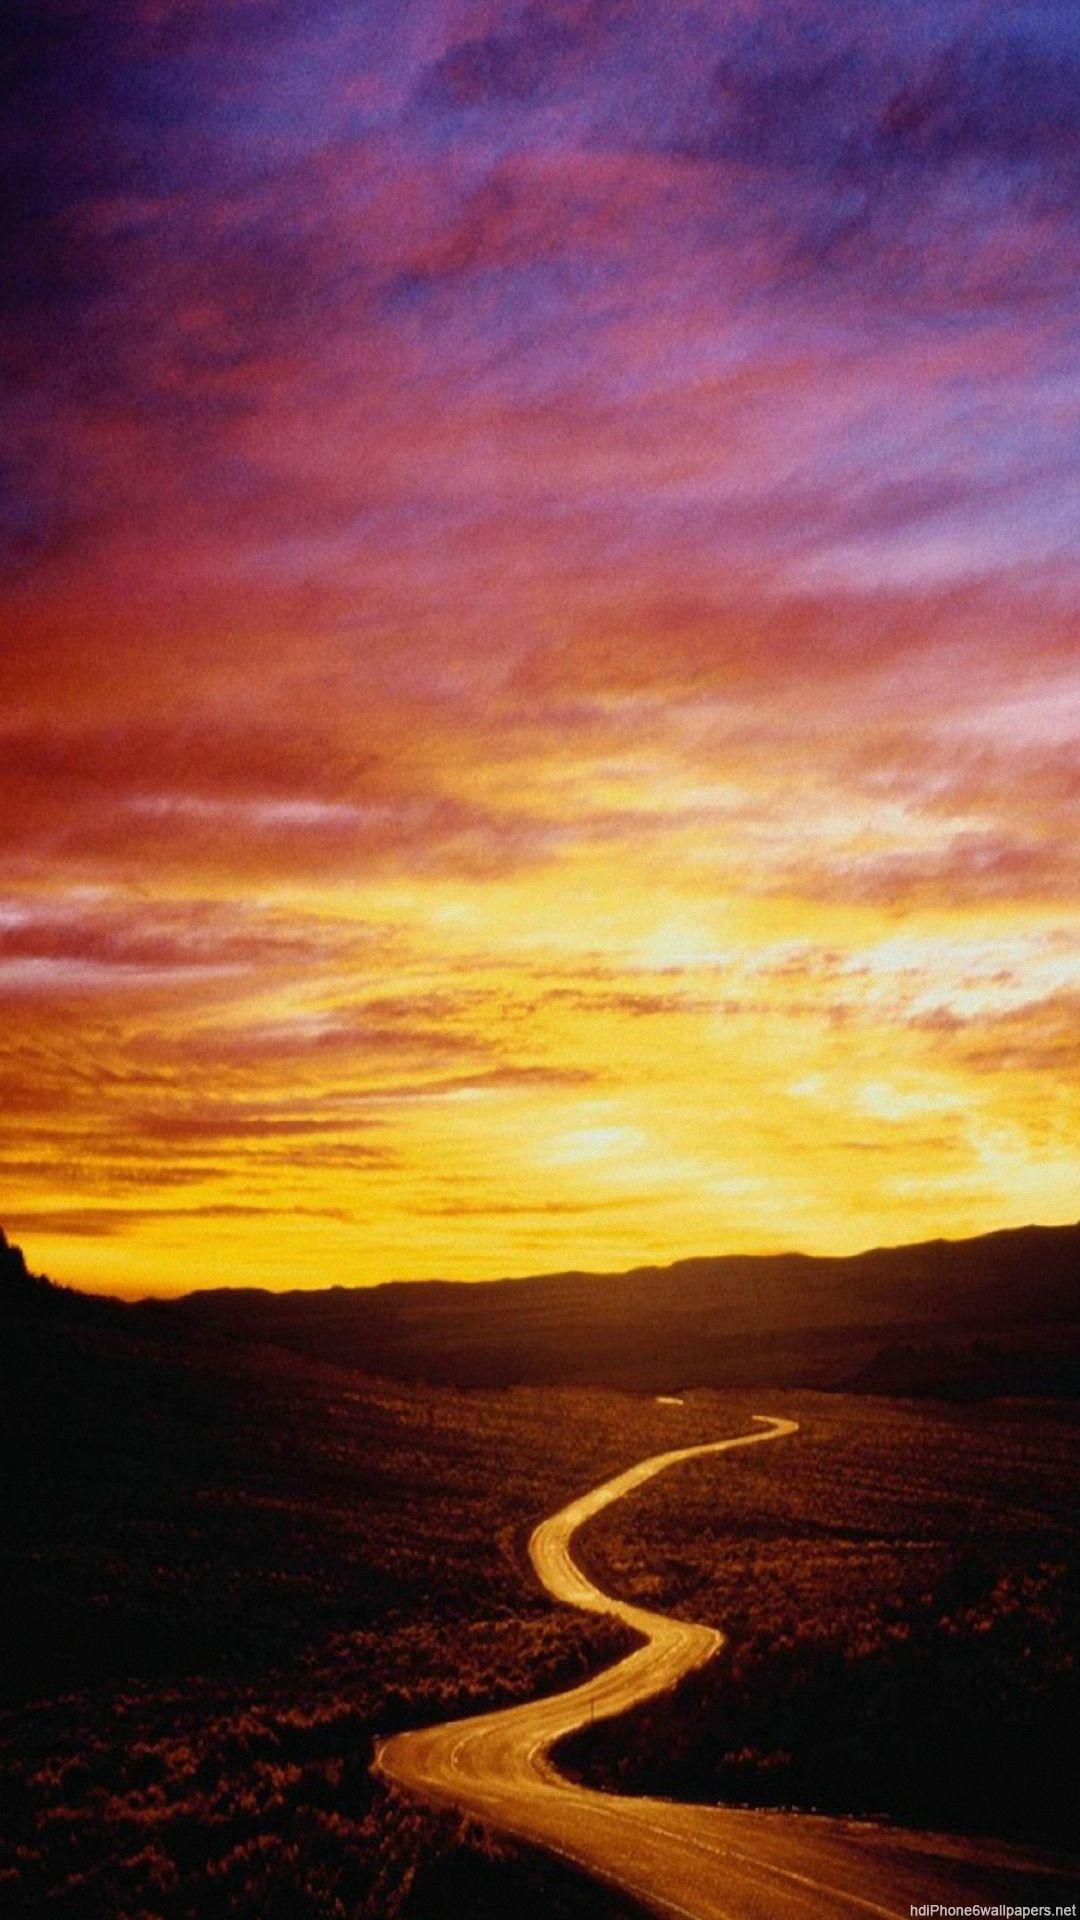 Road Sunset iPhone 6 wallpaper HD and 1080P 6 Plus Wallpaper